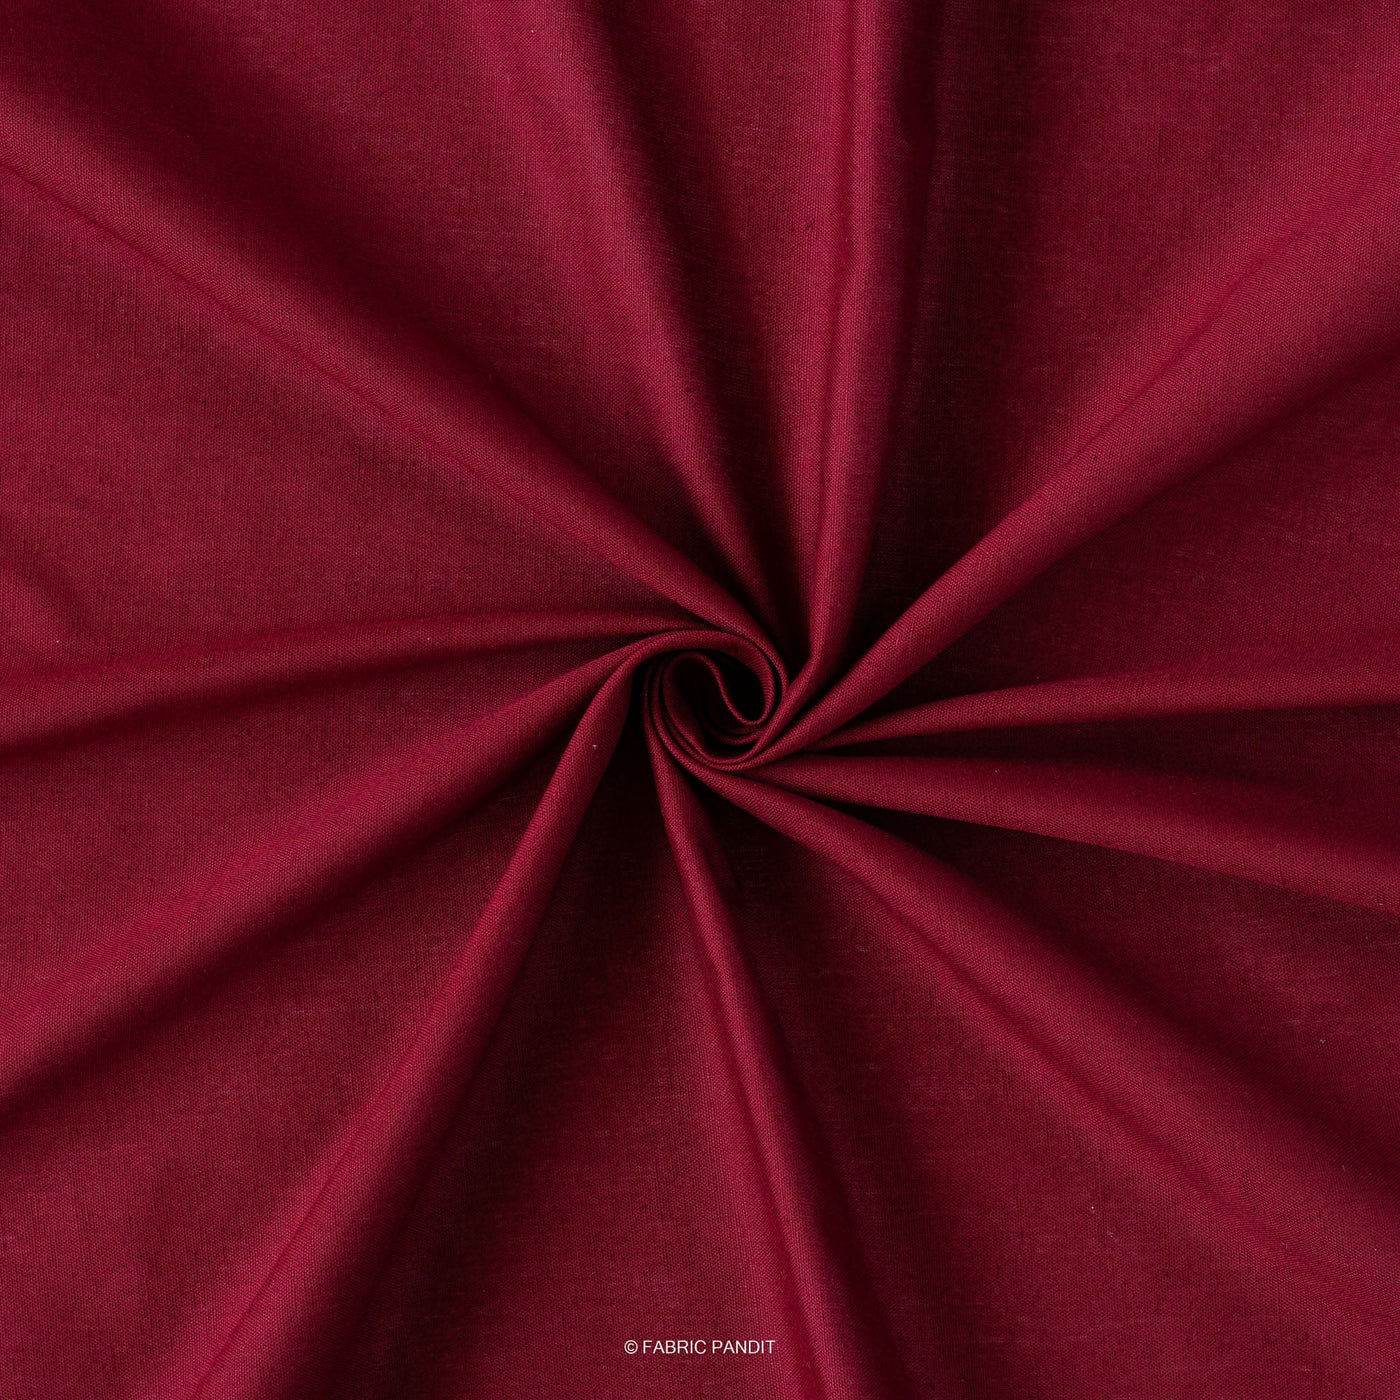 Fabric Pandit Cut Piece (CUT PIECE) Merlot Red Color Pure Cotton Linen Fabric (Width 42 Inches)